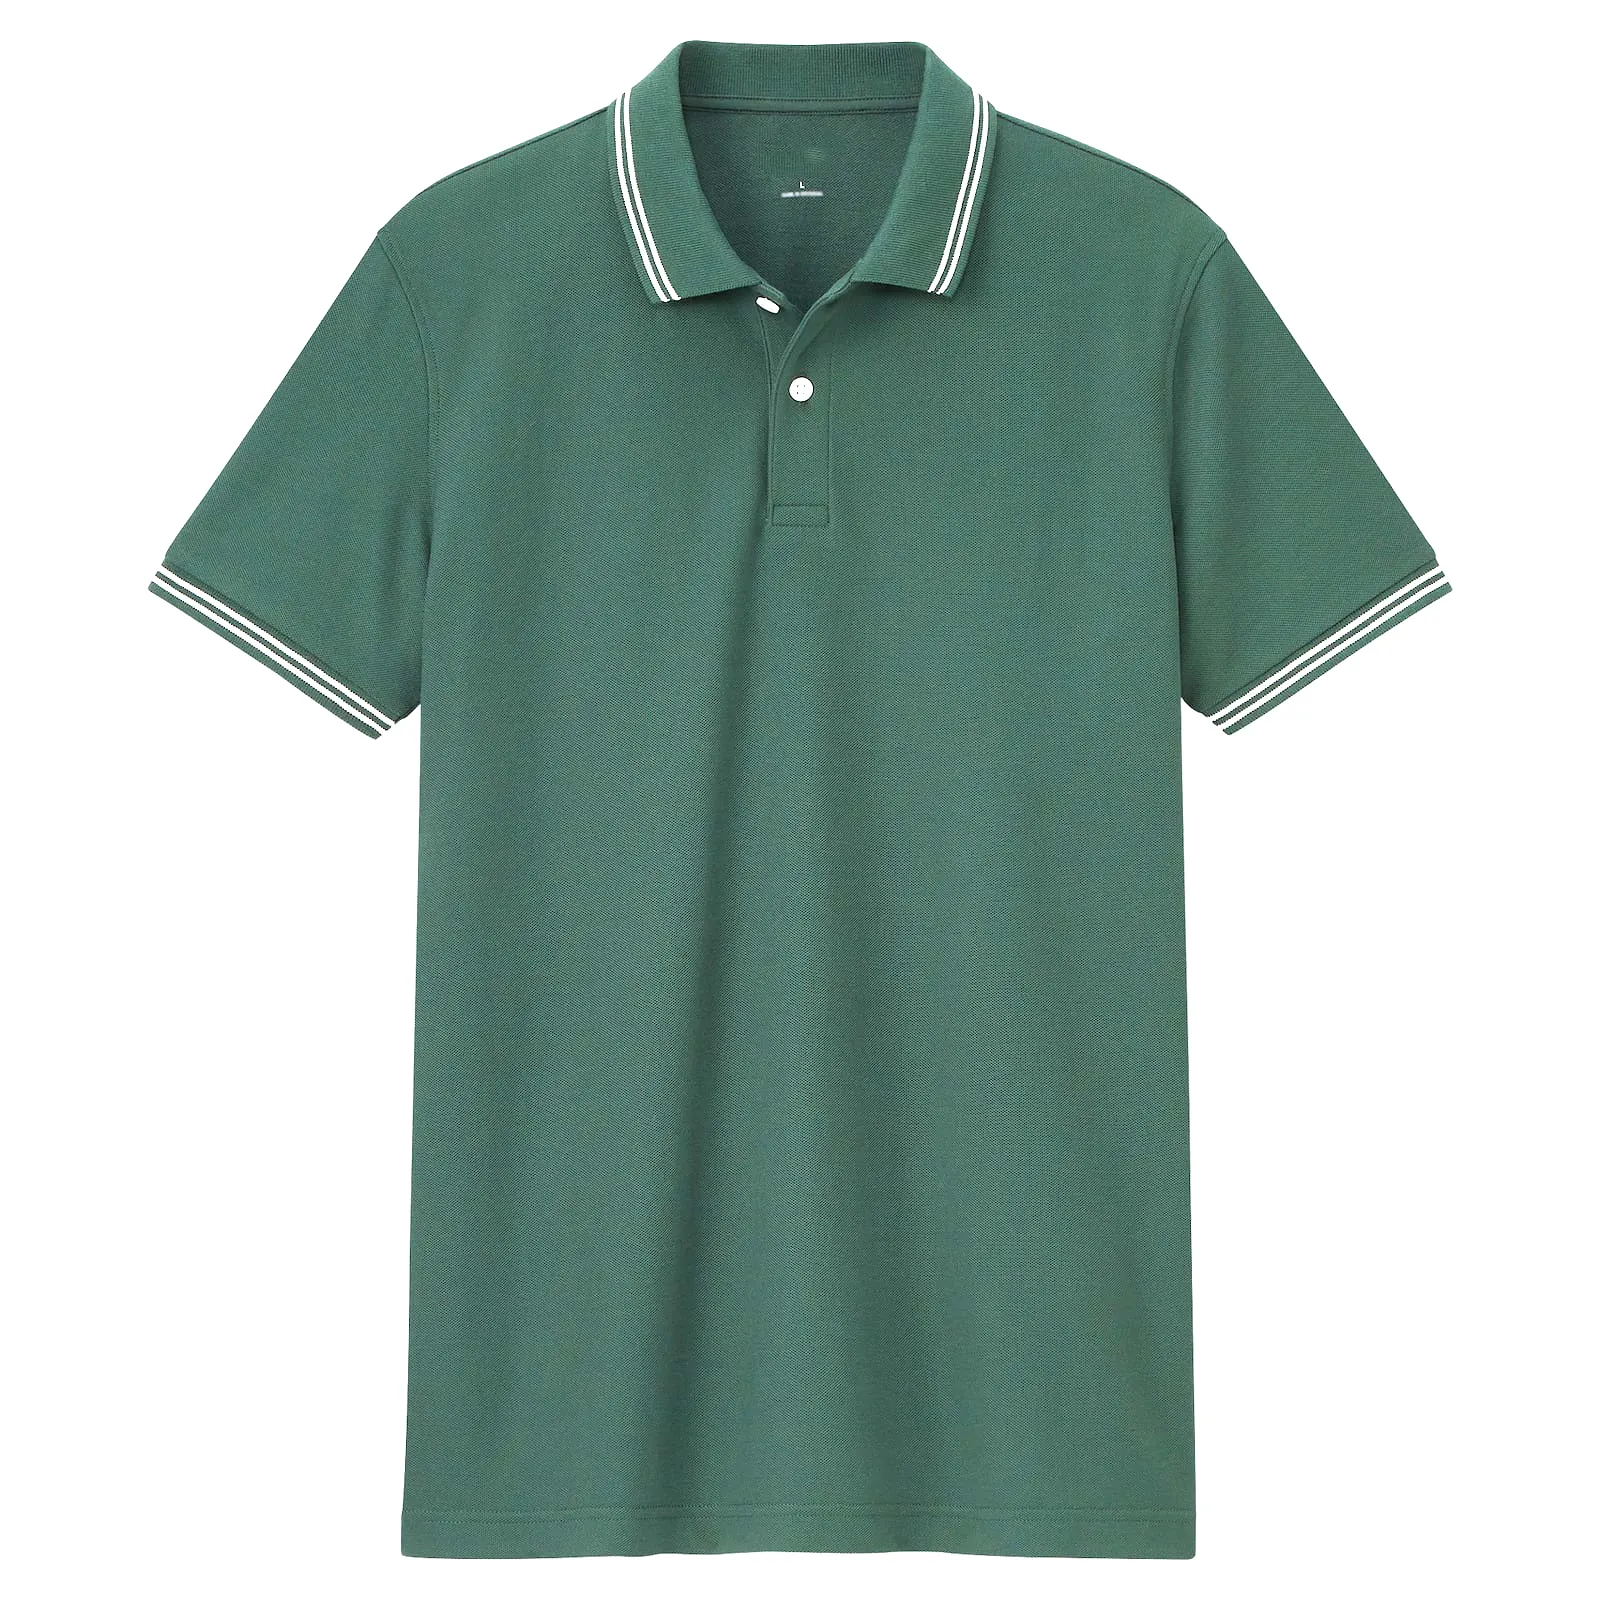 DAN DAN OEM Top Quality Men's Flat knit Collar Two button placket stylish Elegant Casual embroidery Logo Polo Shirts